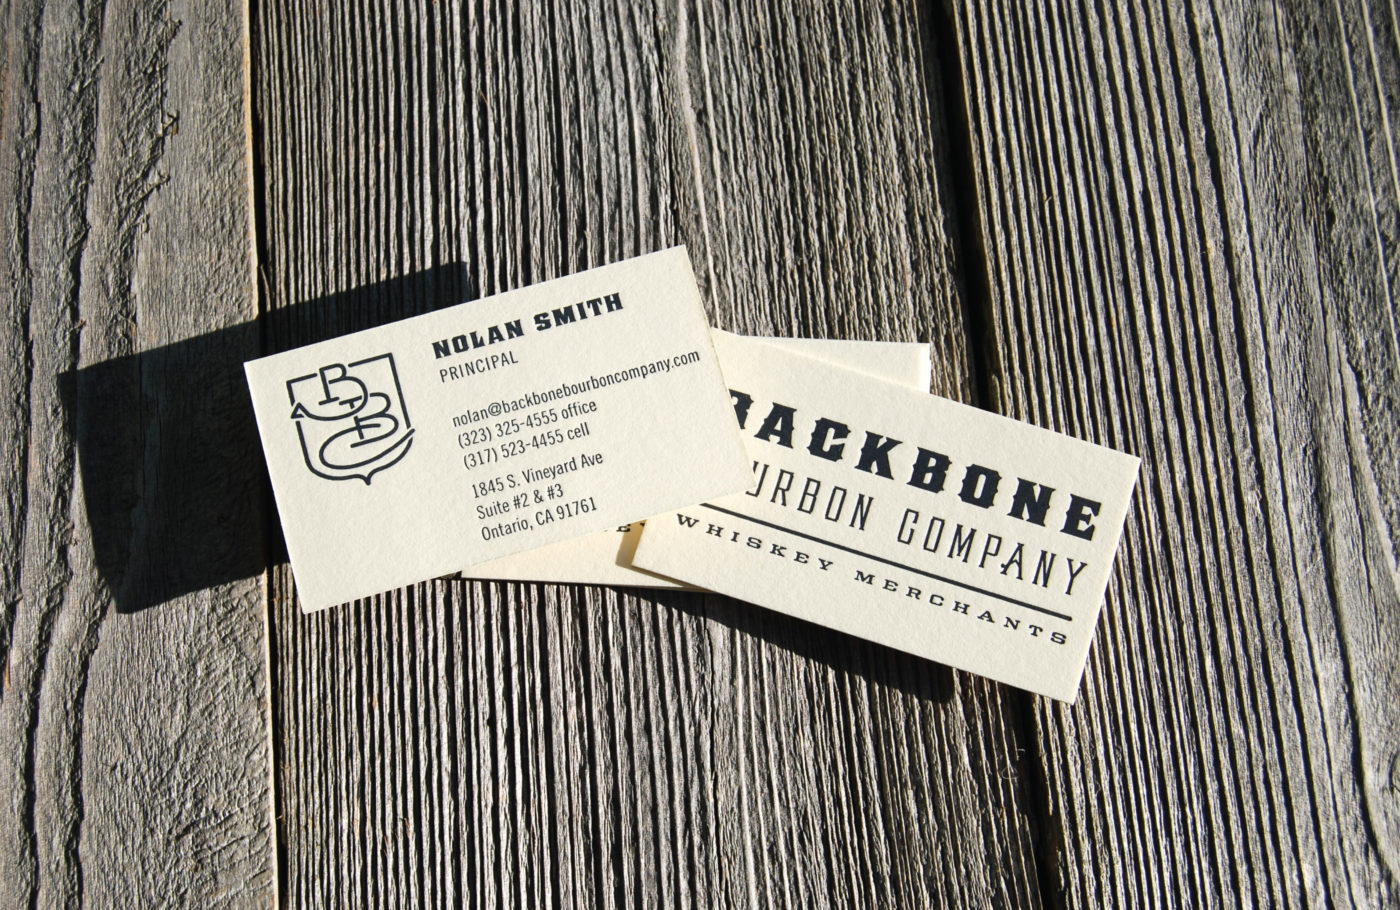 Backbone Bourbon Co. Branding by CODO Design.